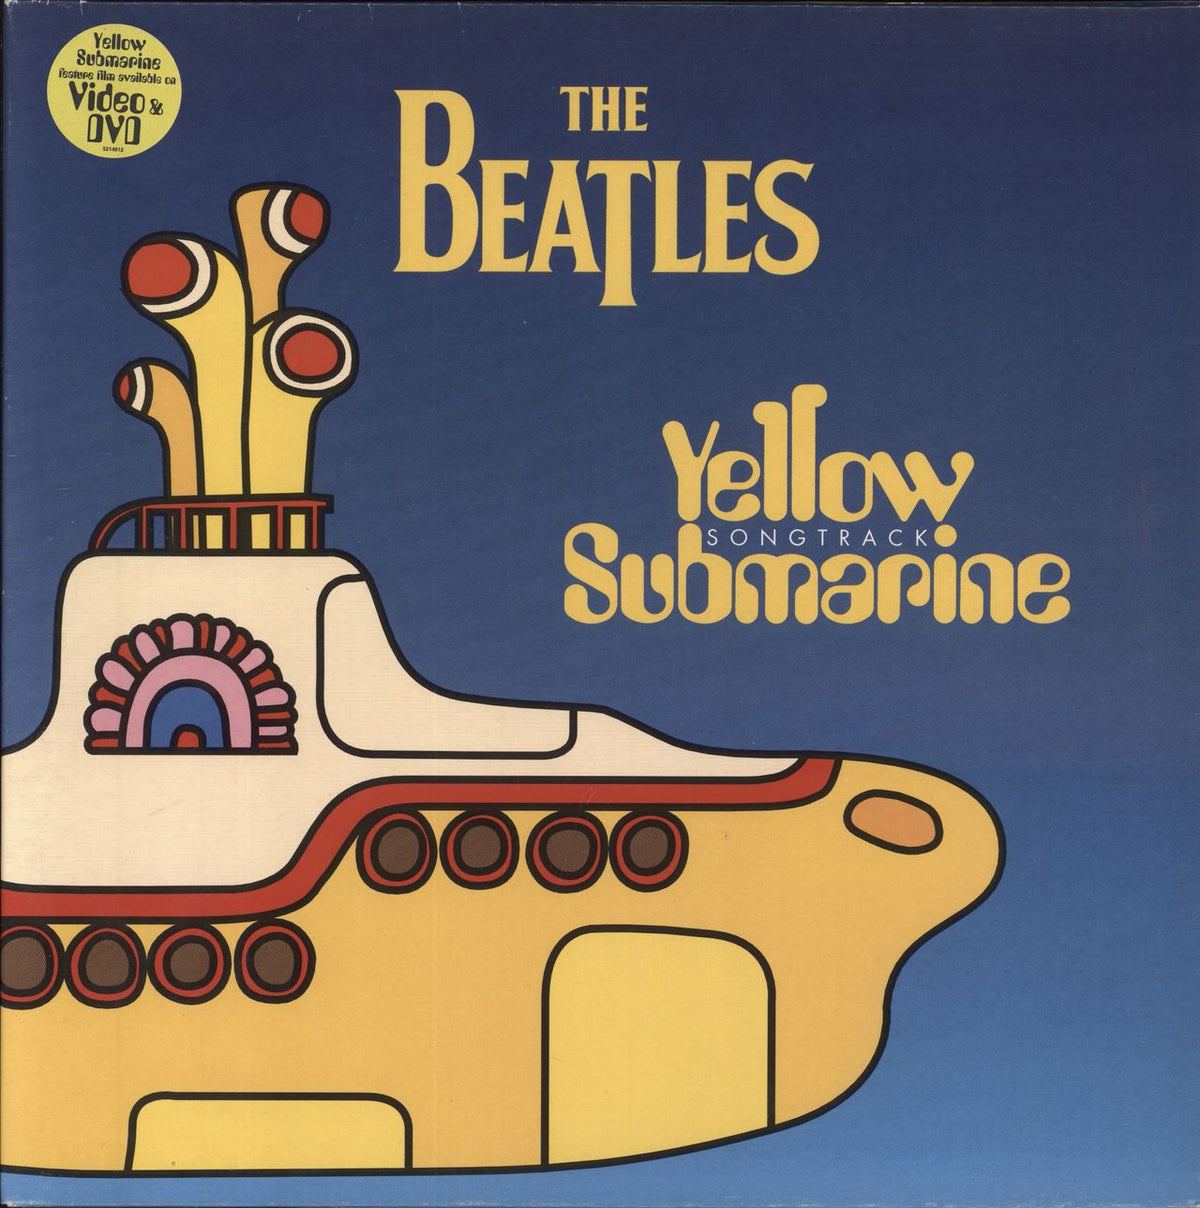 The Beatles Yellow Submarine Songtrack - Yellow UK Vinyl LPDefault Title